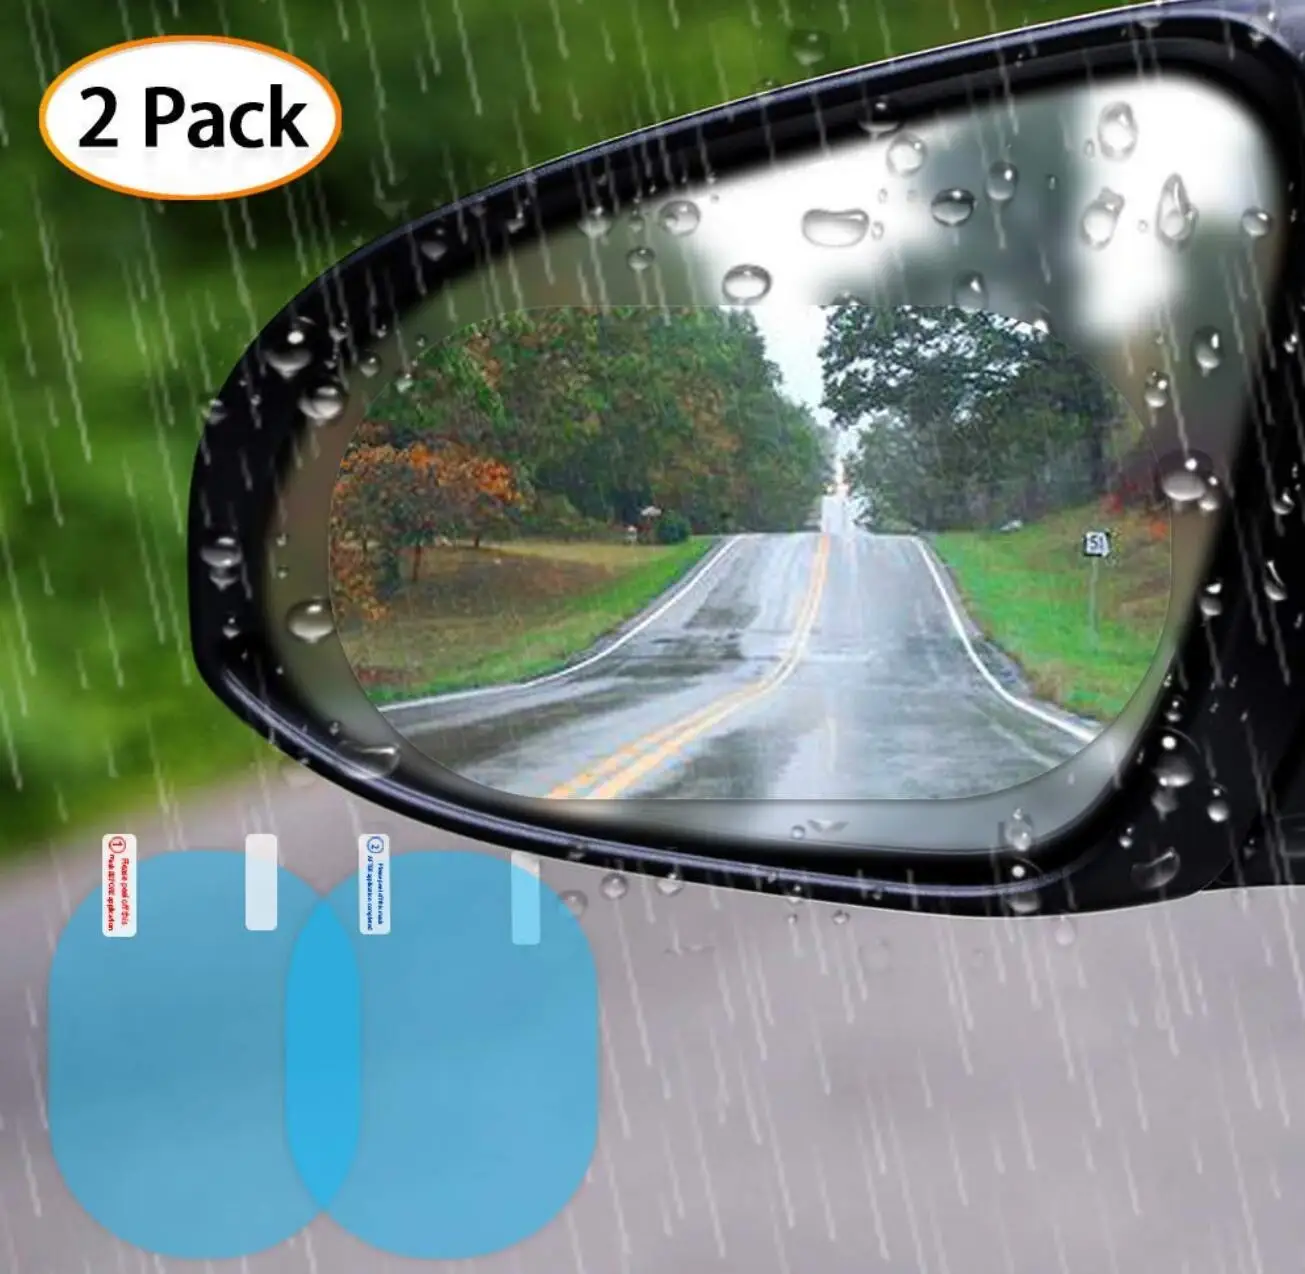 2PCS Rainproof Film Anti Fog Side Window Reflective Anti-Scratch Clear Protective Micro-Nano for Car Rearview Mirror |